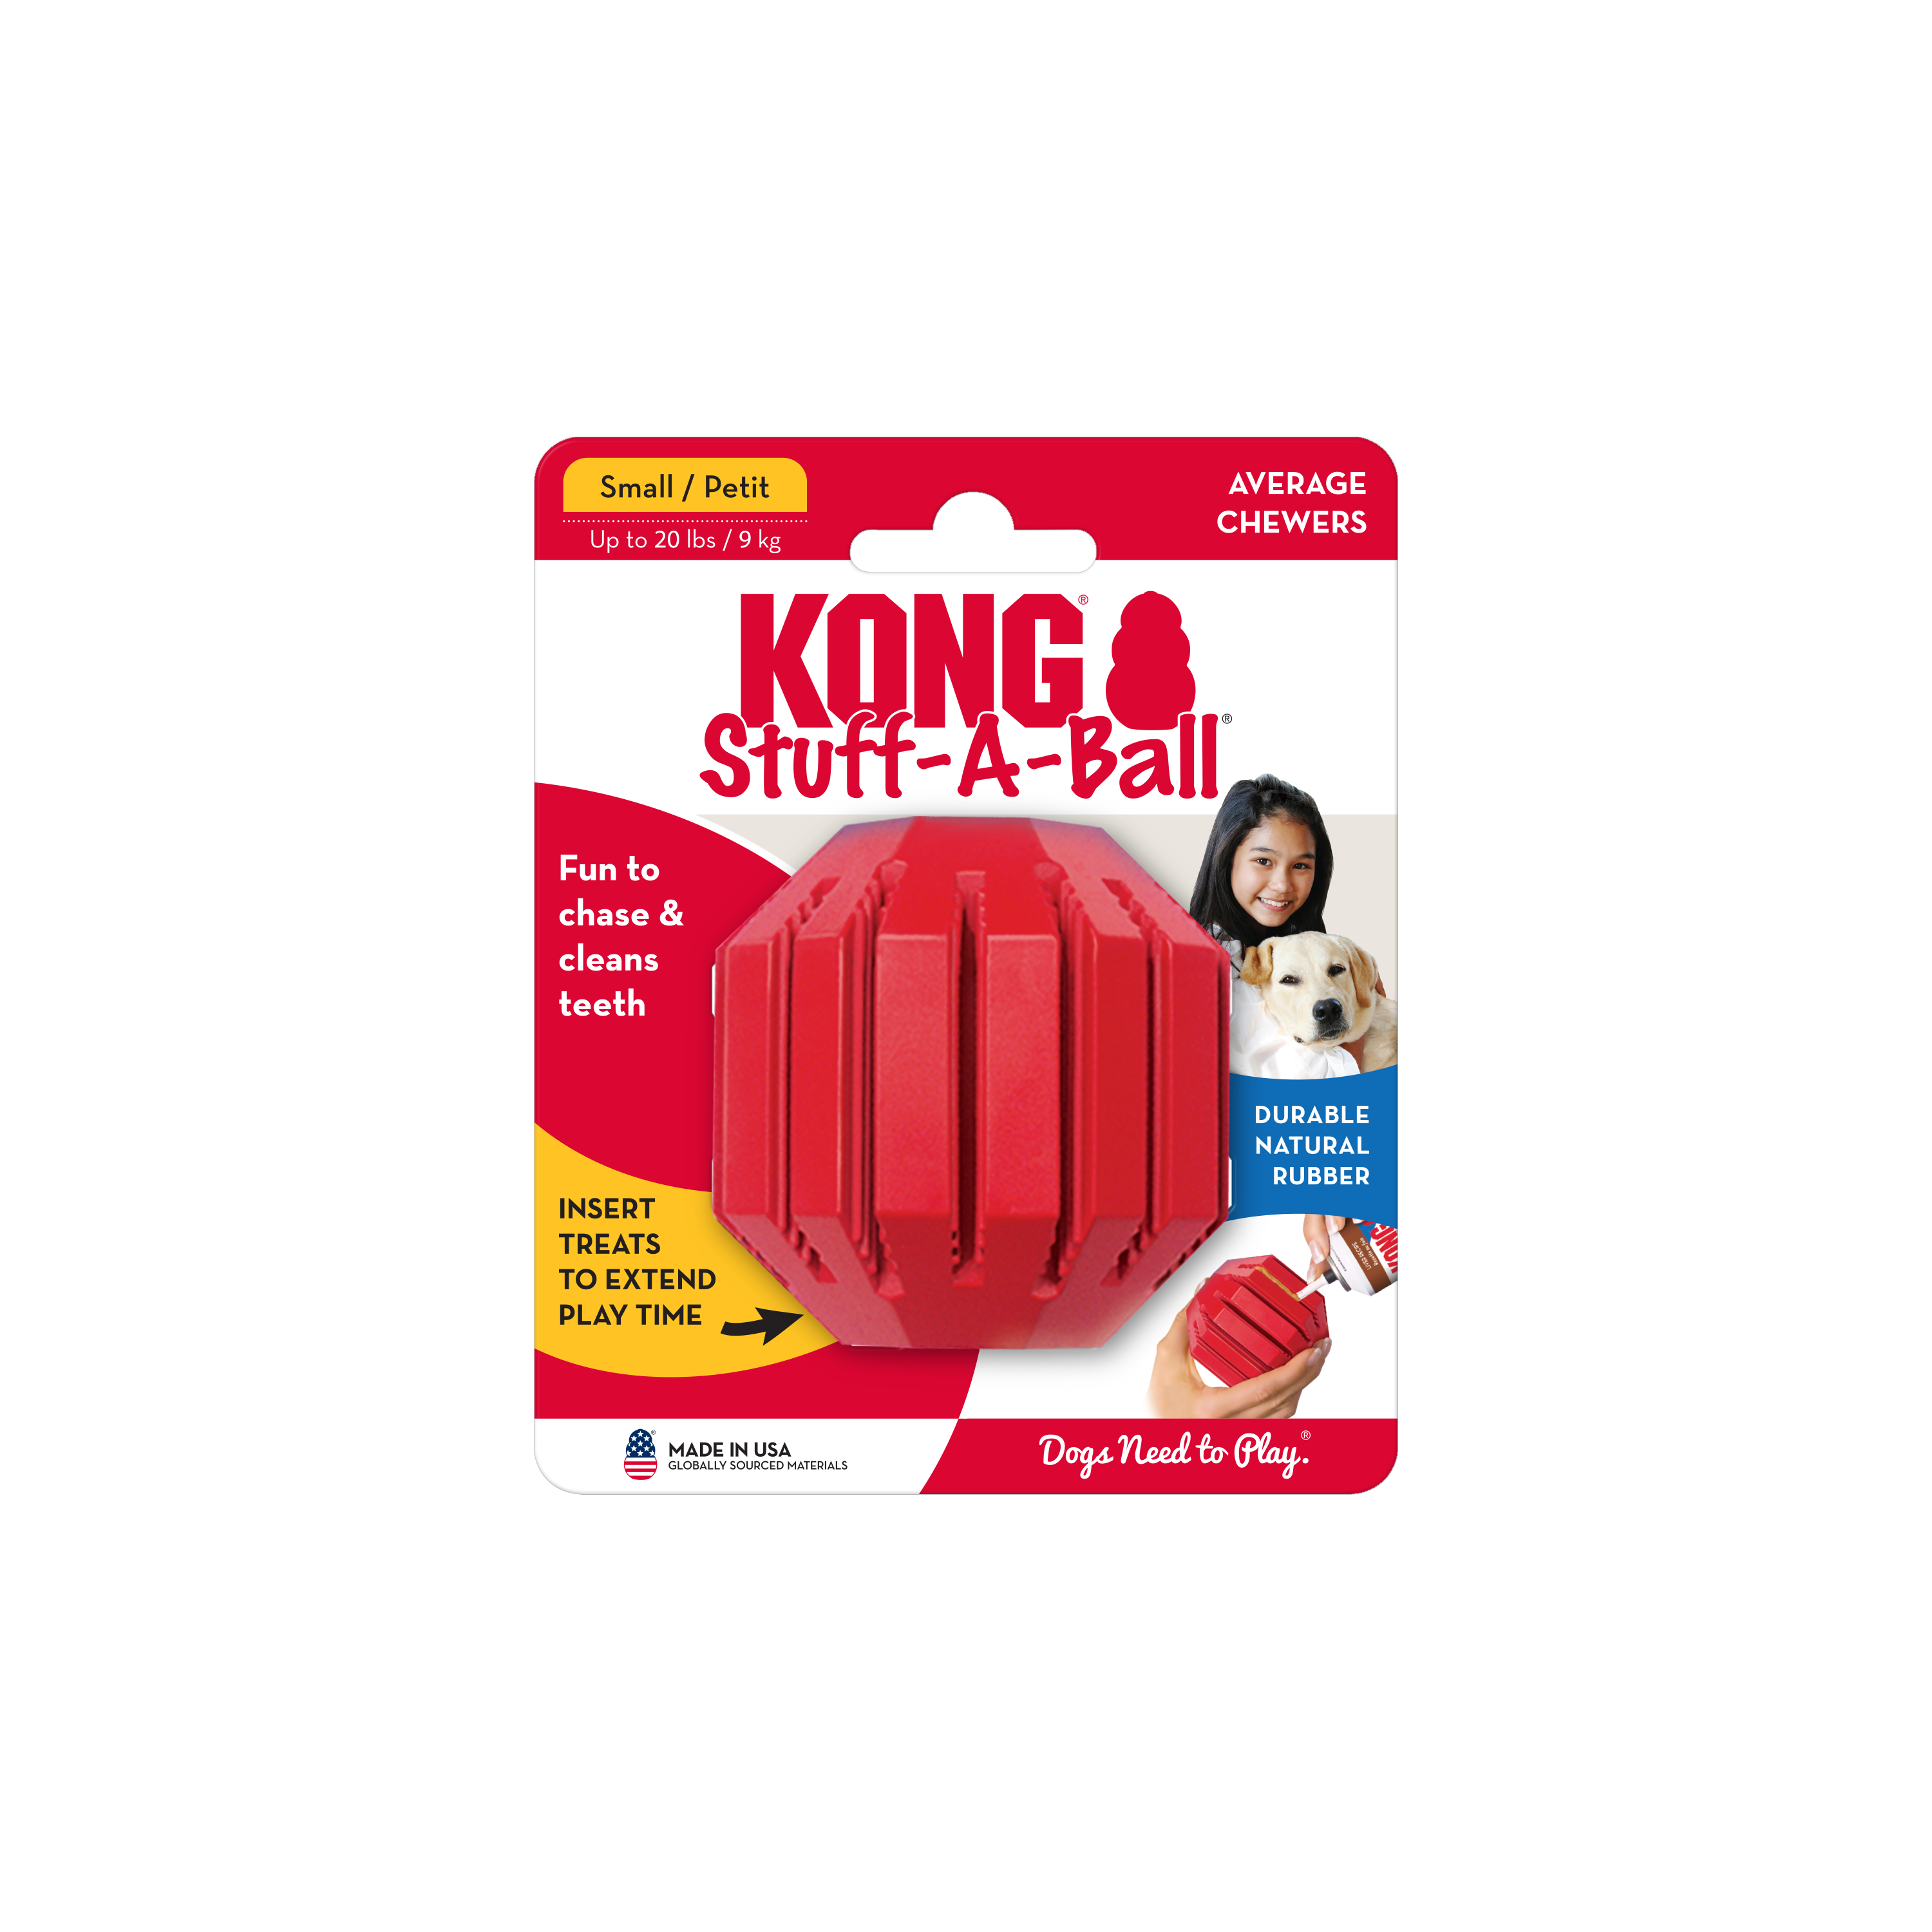 KONG Stuff-A-Ball onpack product image